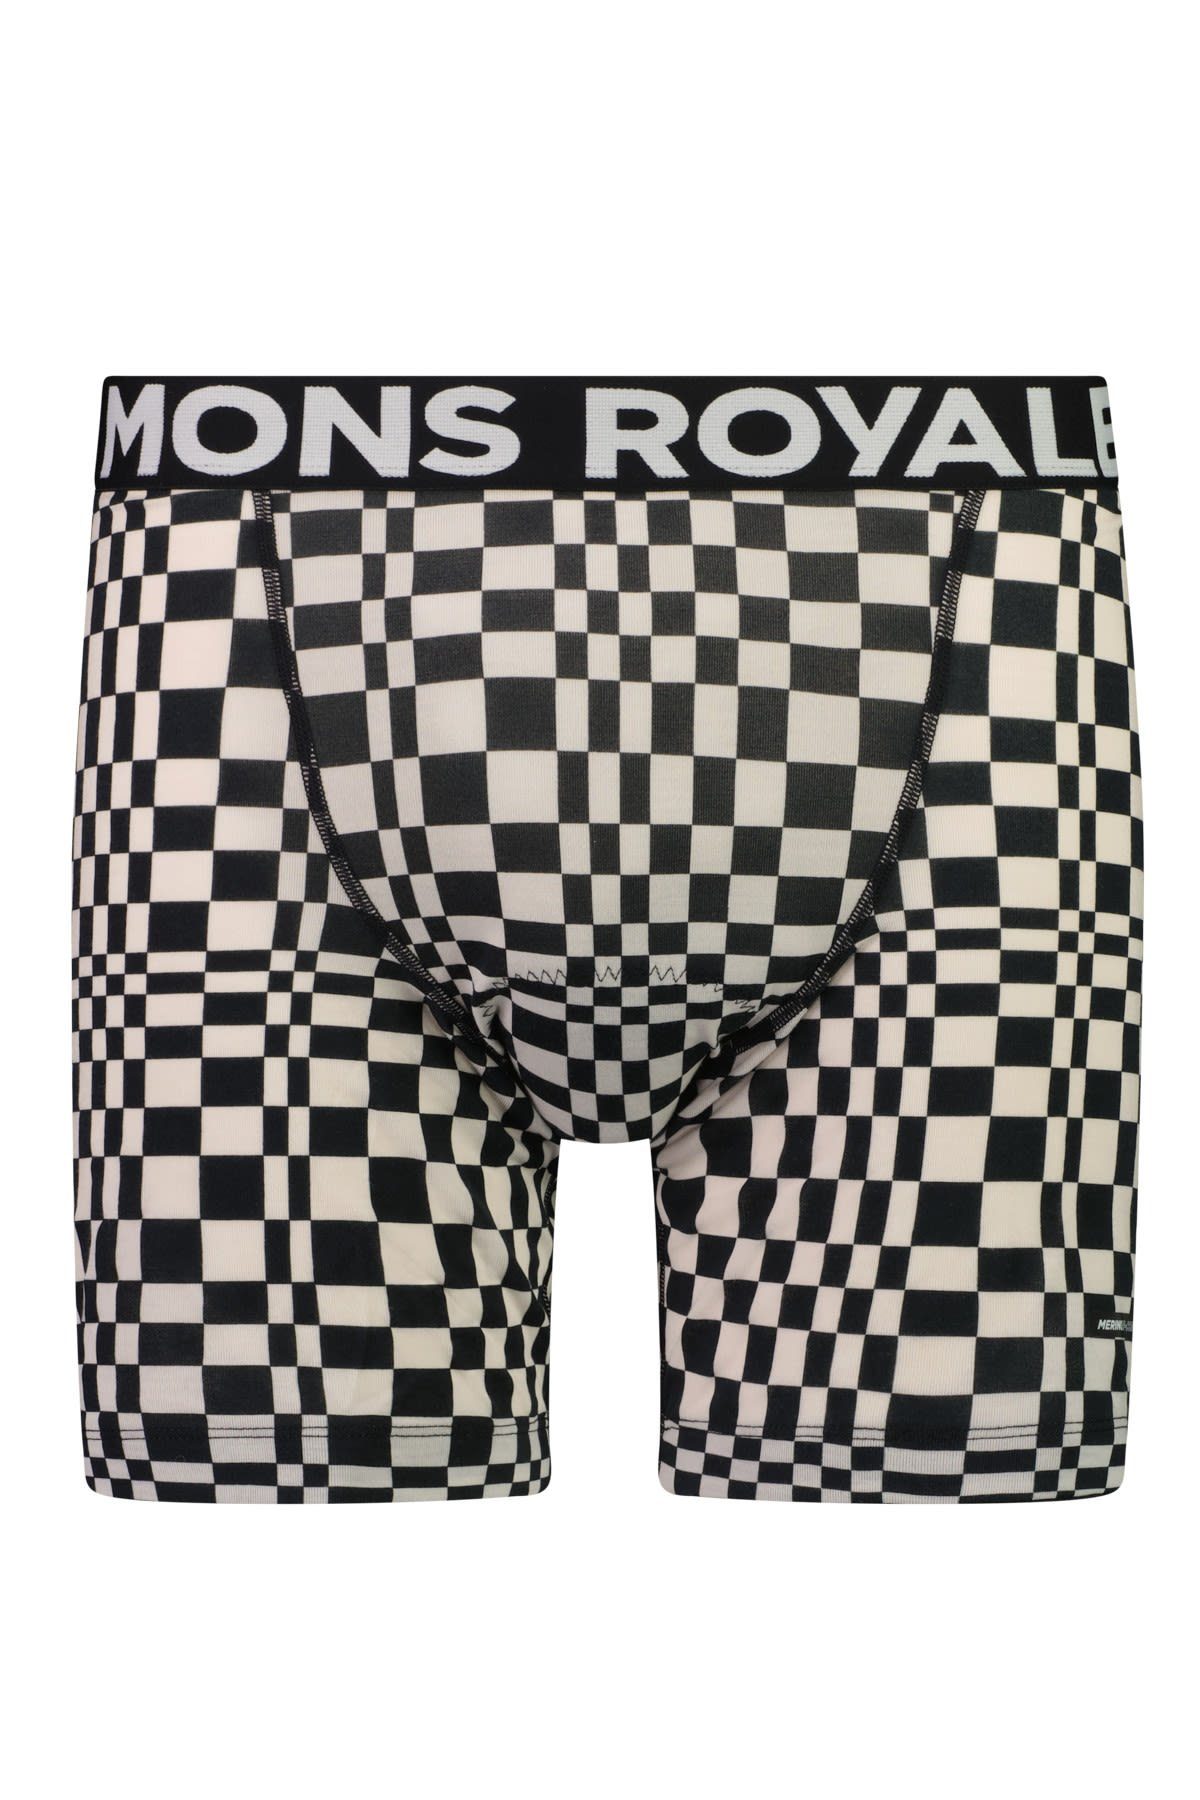 Mons Royale Lange Checkers Unterhose